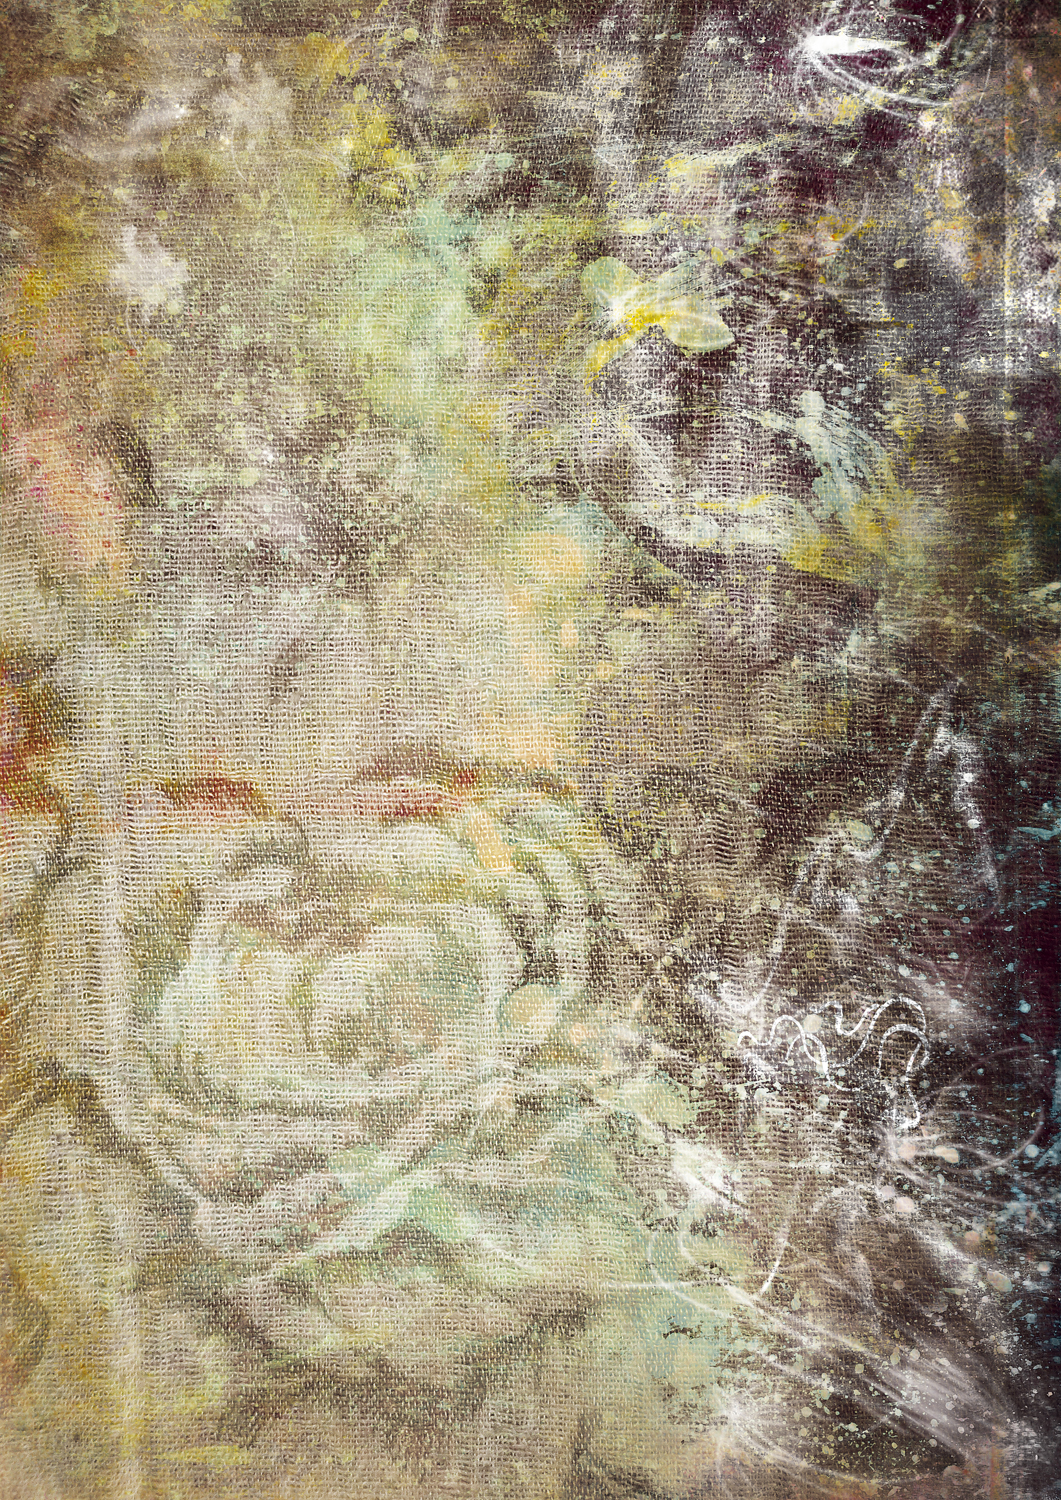 Grunge texture background image, free download